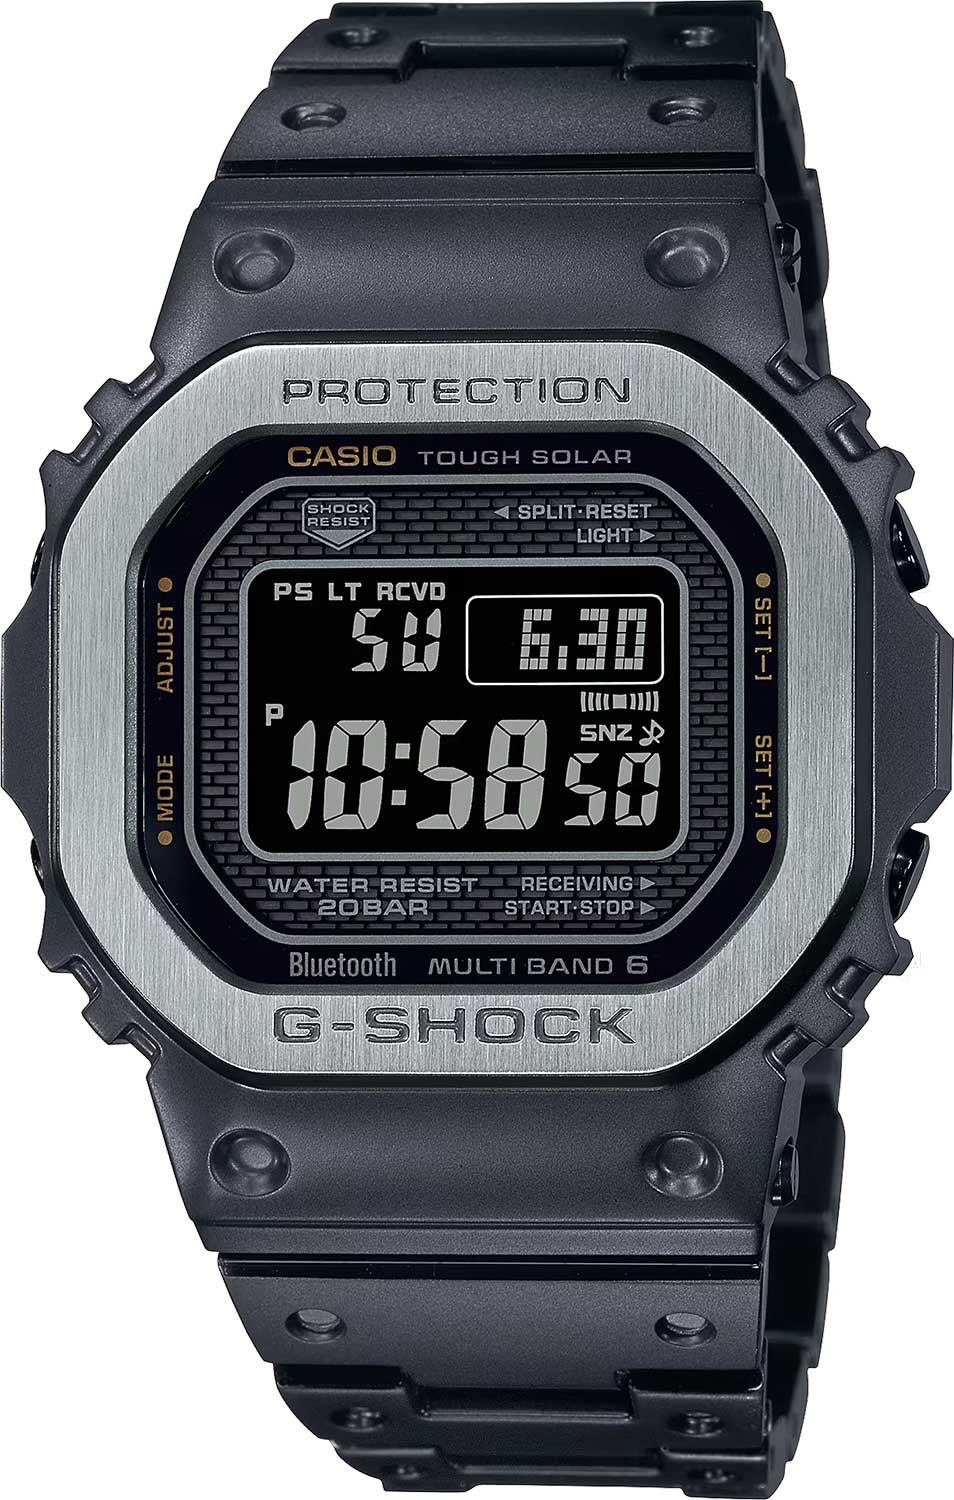    Casio G-SHOCK GMW-B5000MB-1E  